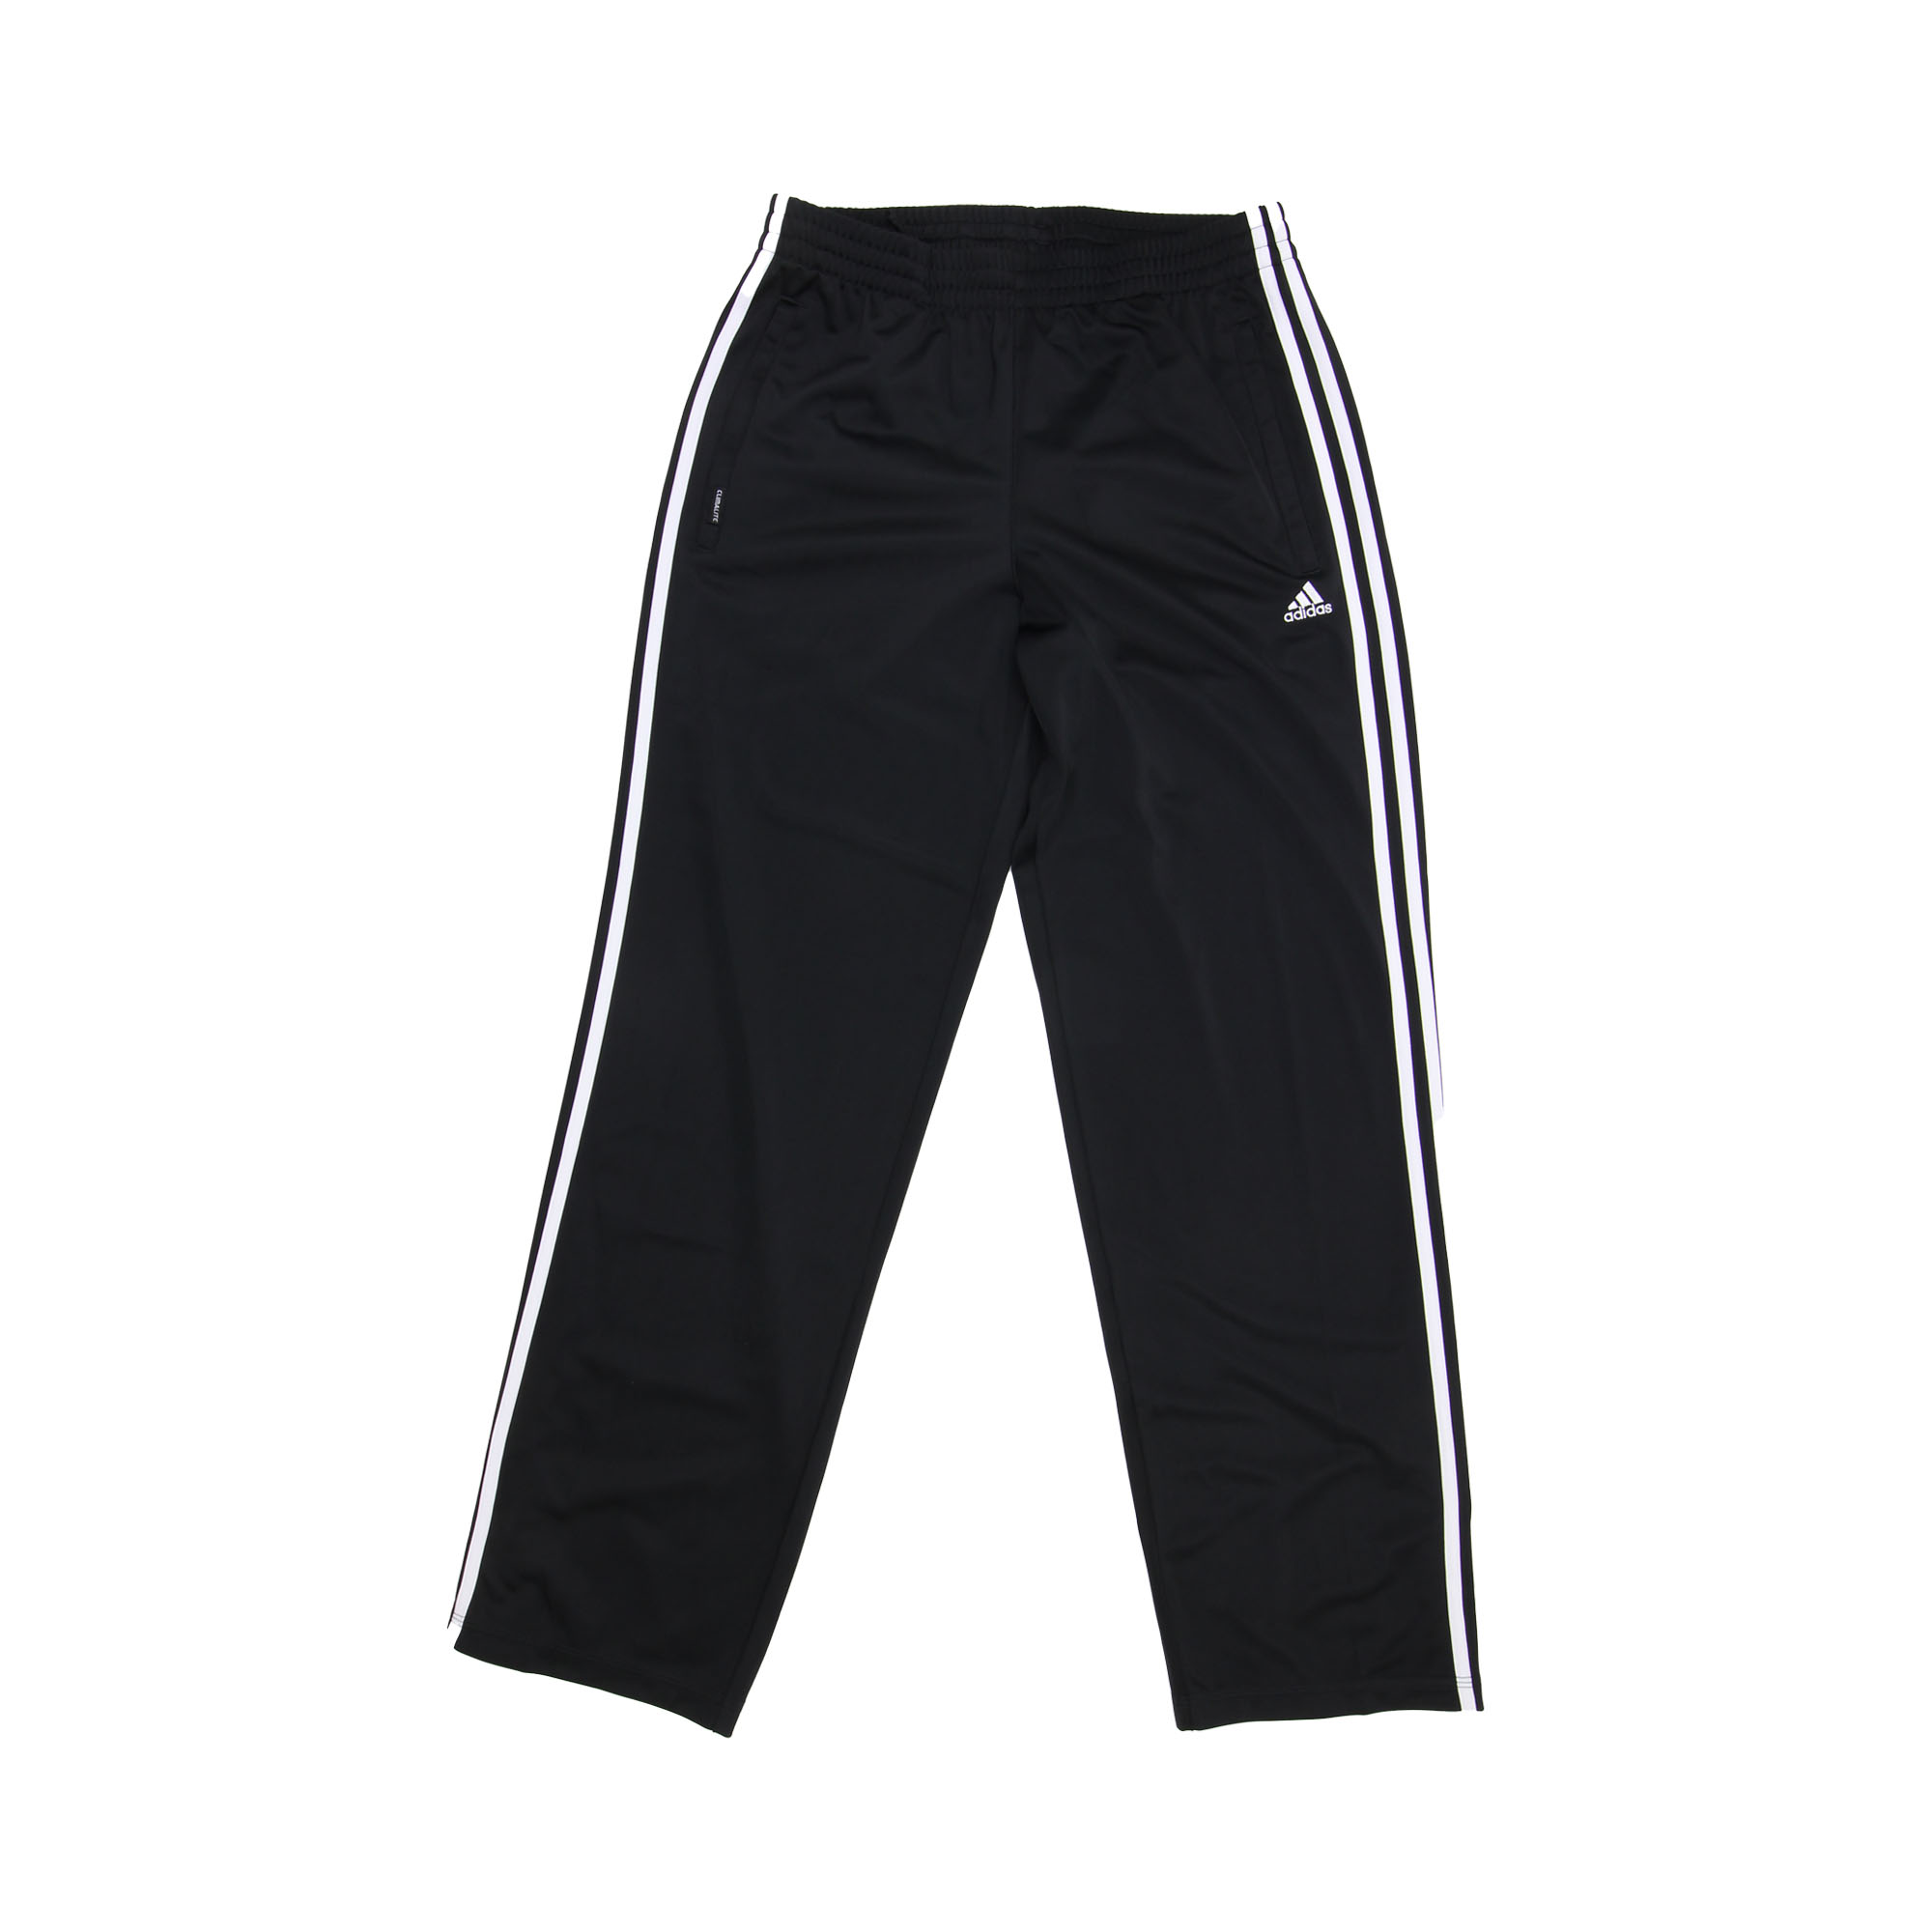 Adidas Sweatpants Black -  M/L